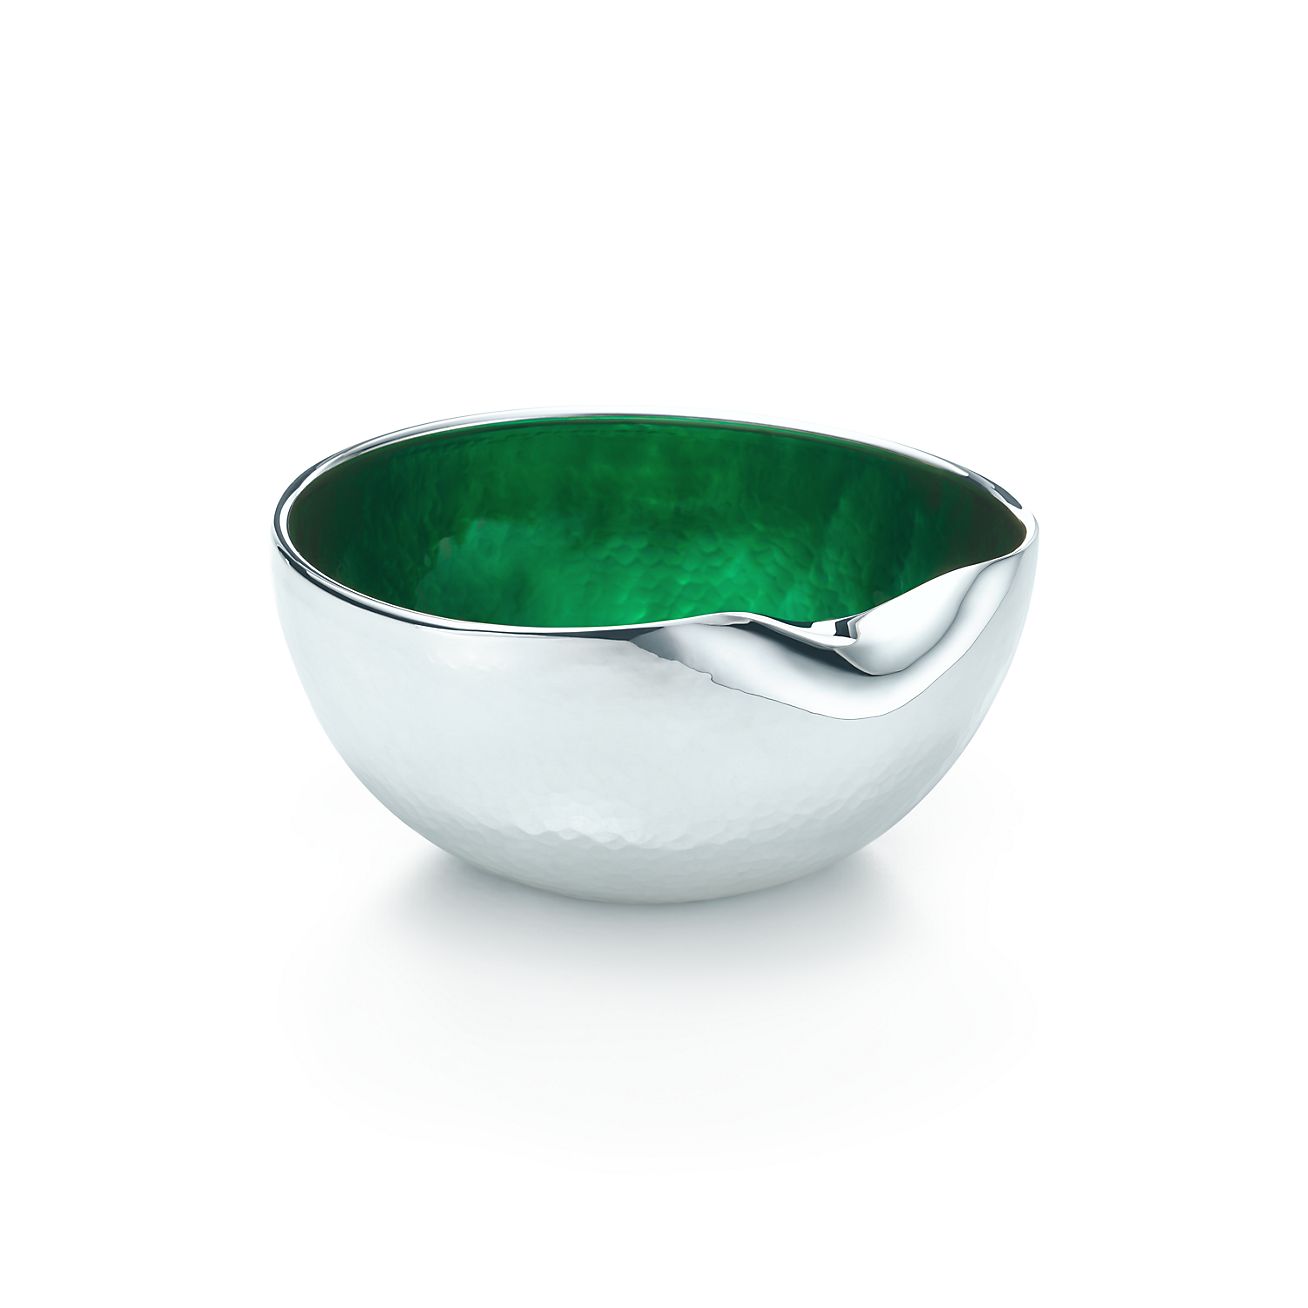 Elsa Peretti® Thumbprint bowl in sterling silver with green enamel finish.  | Tiffany u0026 Co.